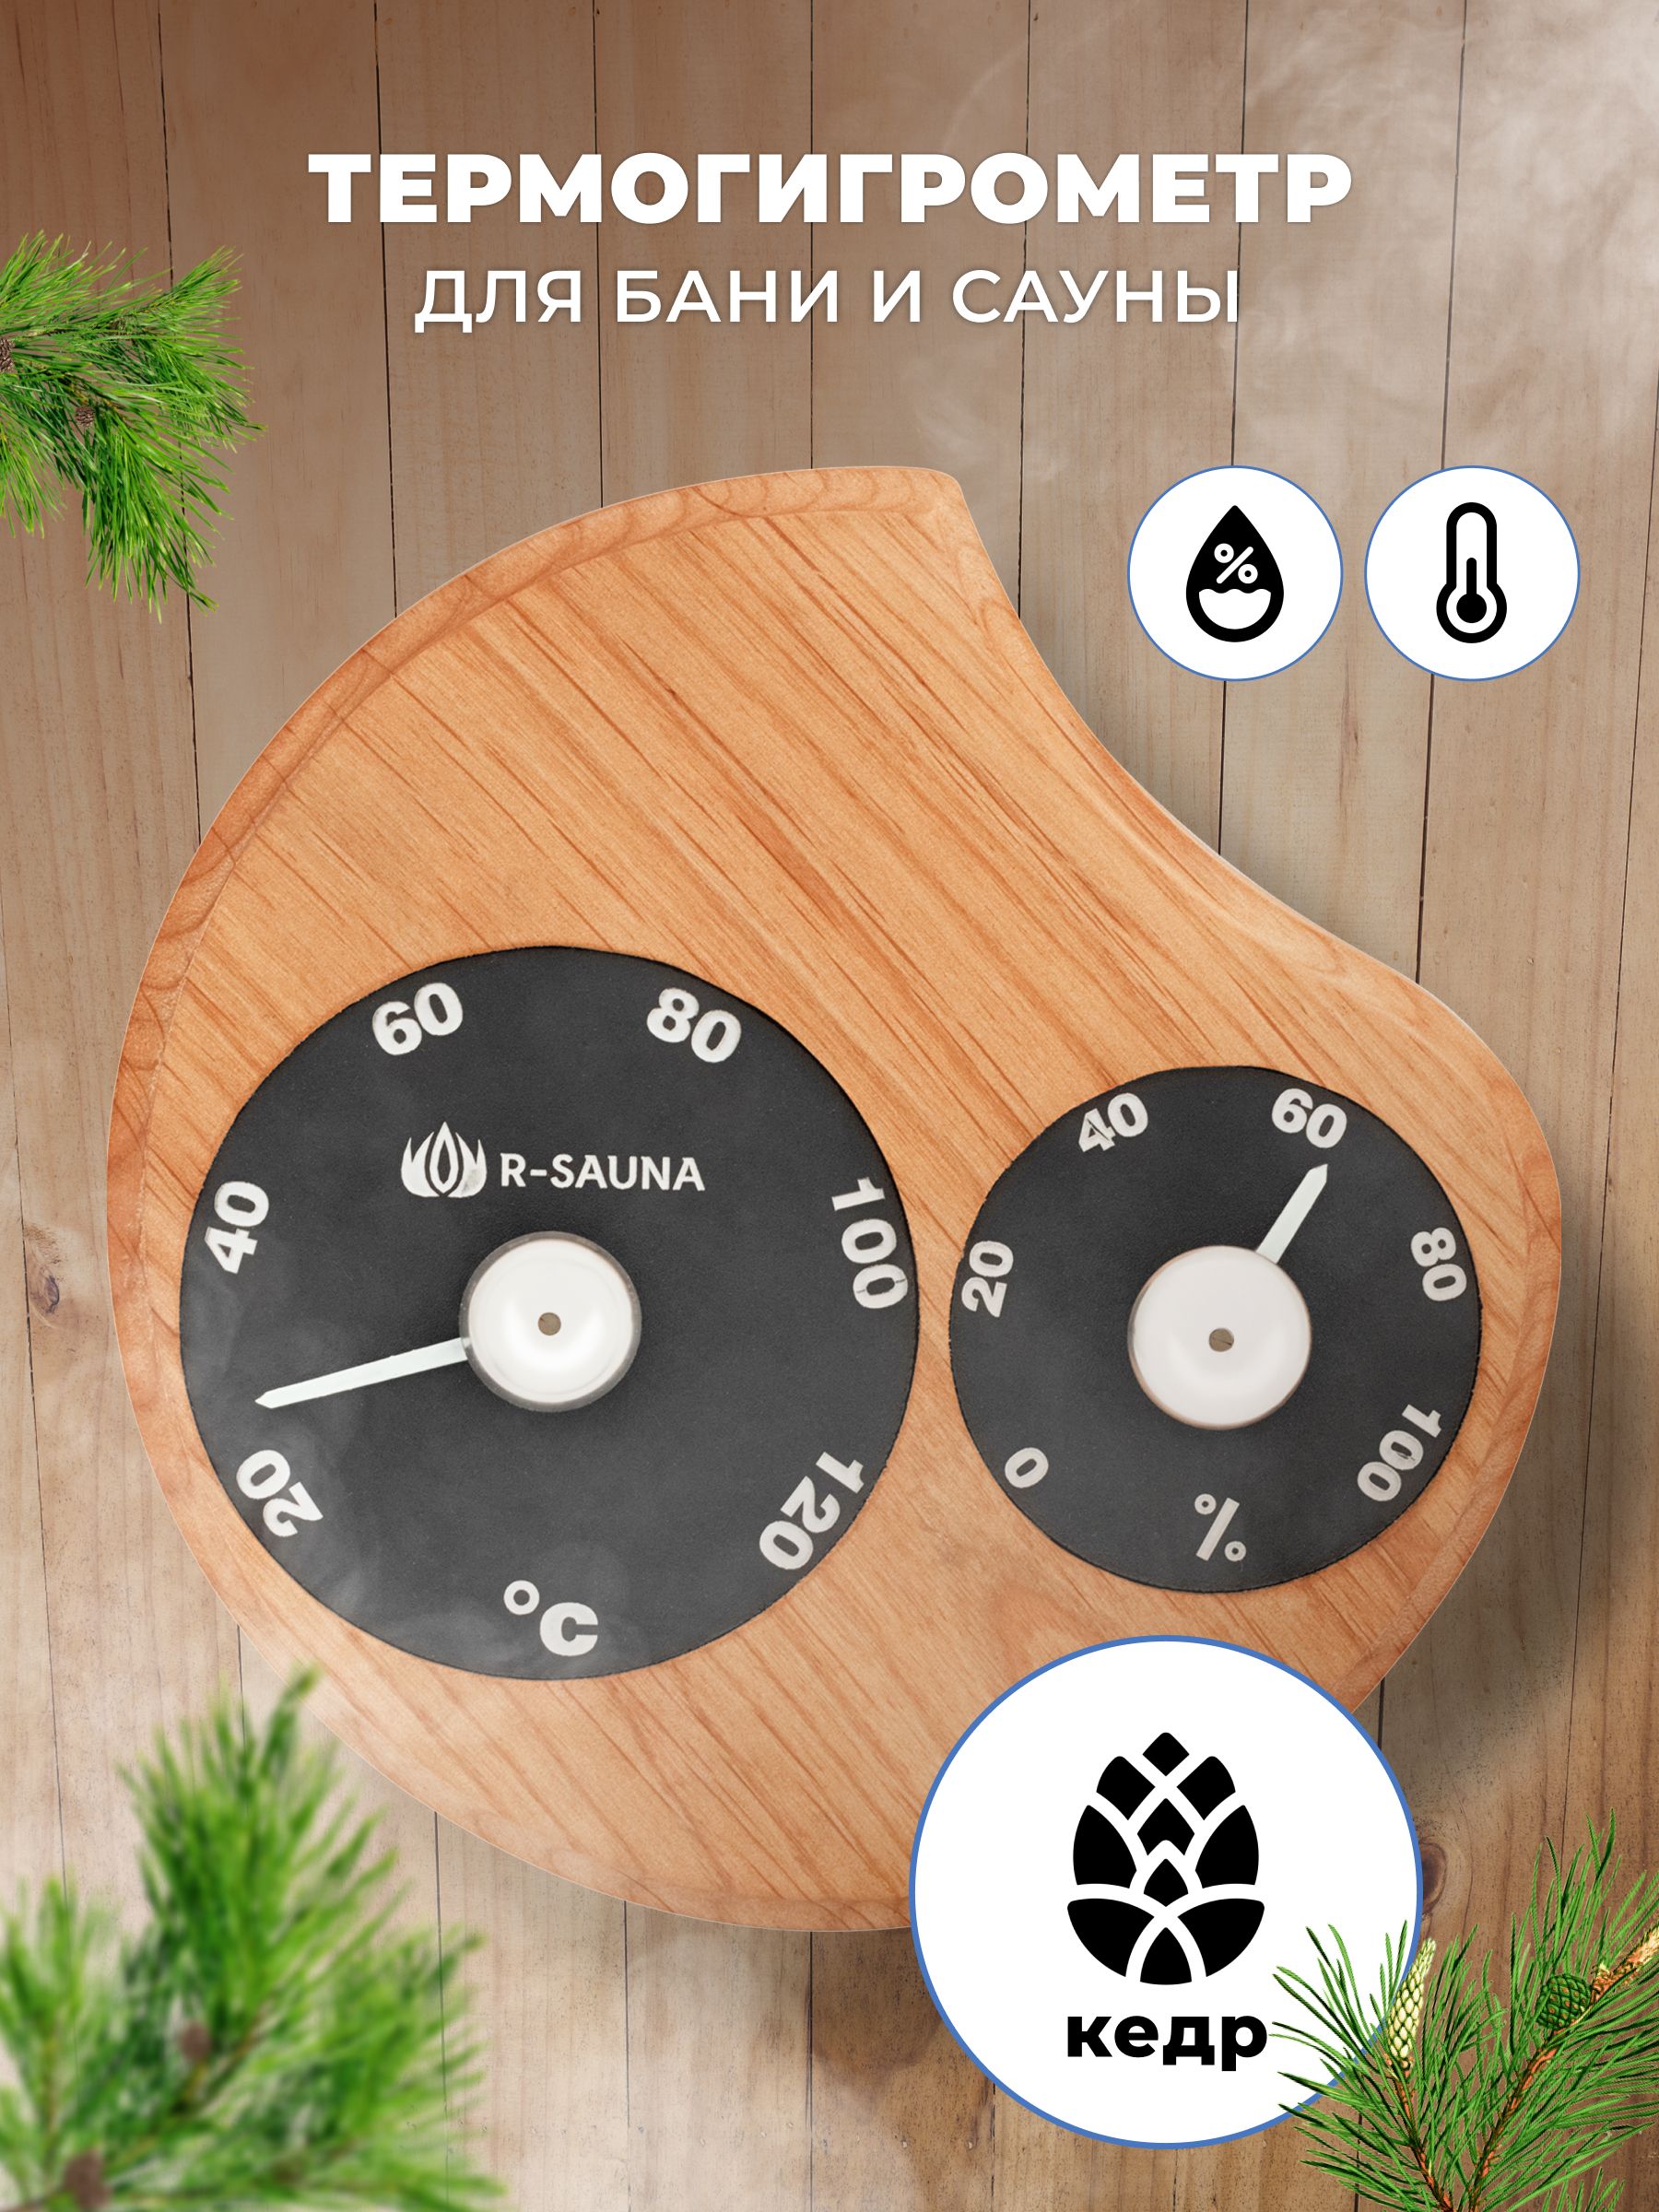 Термогигрометр для бани и сауны R-SAUNA 25185 канадский кедр